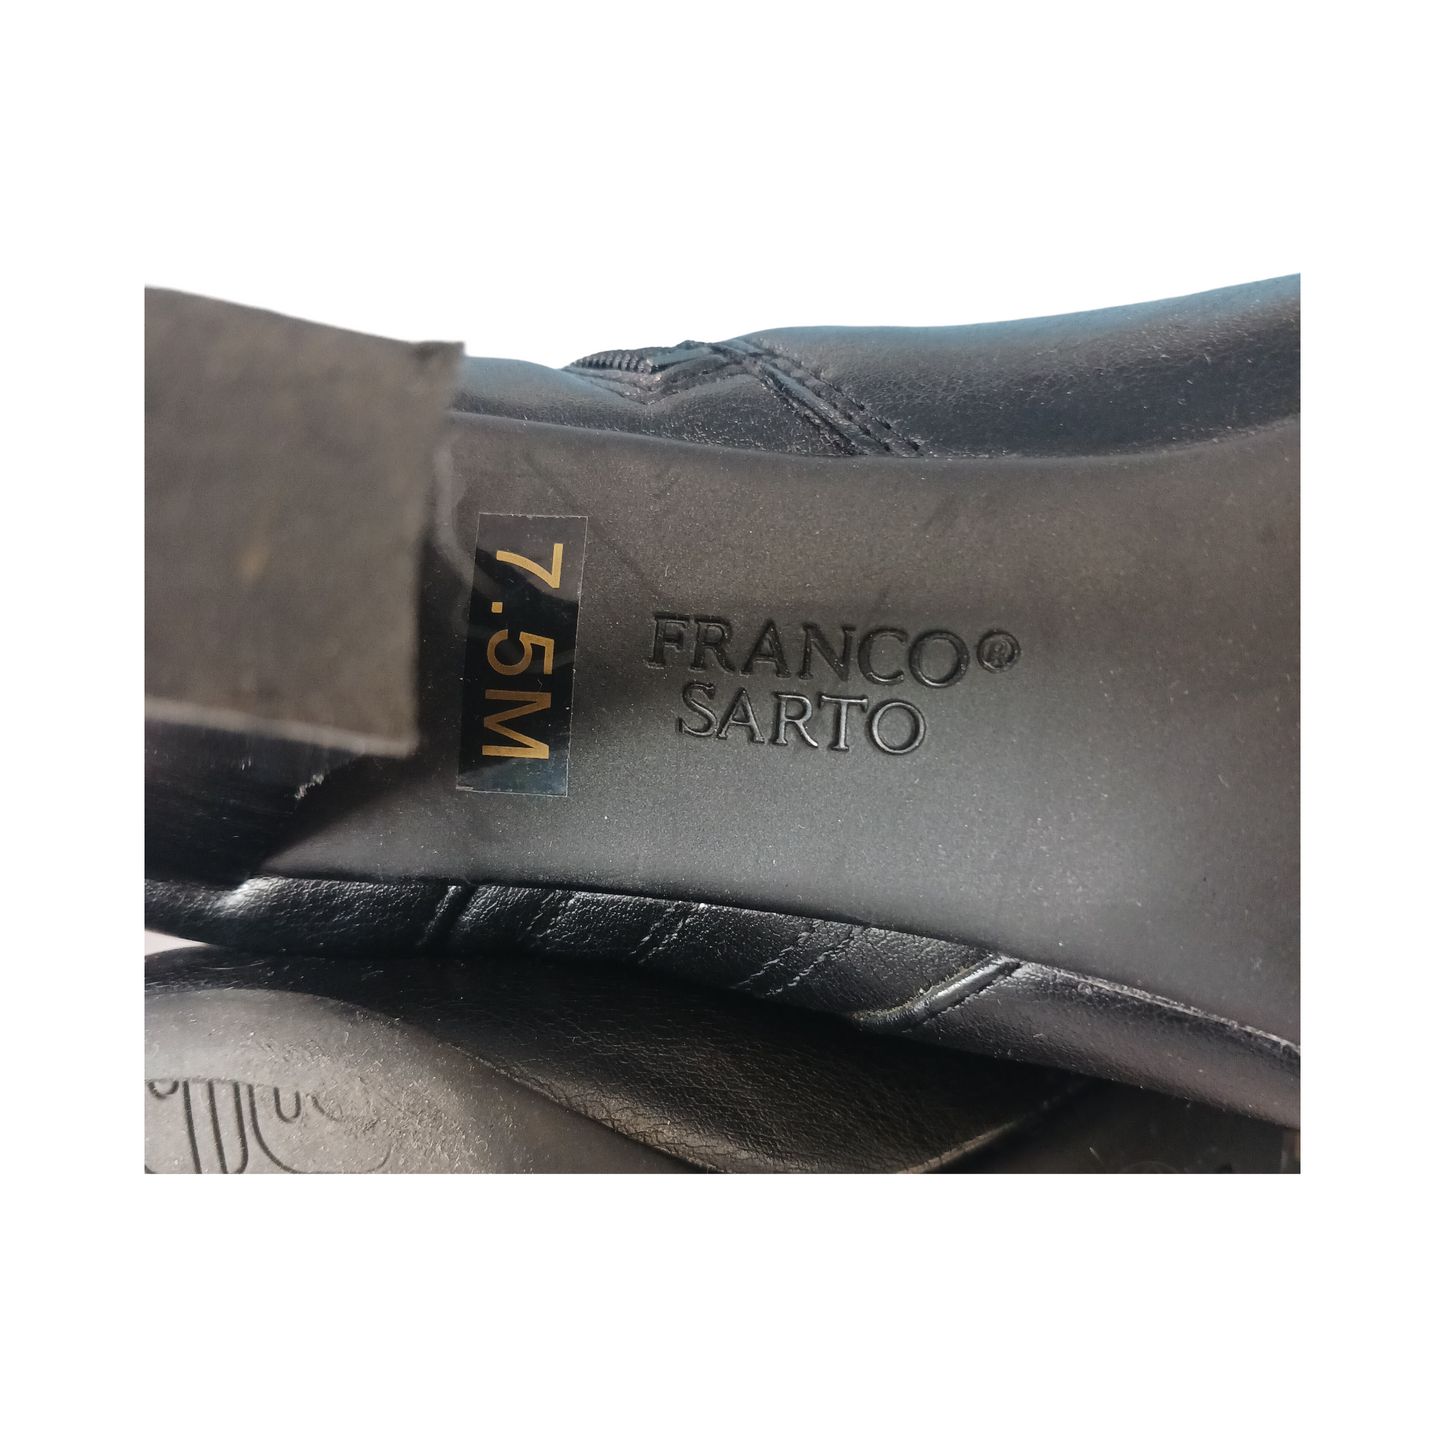 Franco Sarto Black Ankle Boots, Size US 7.5